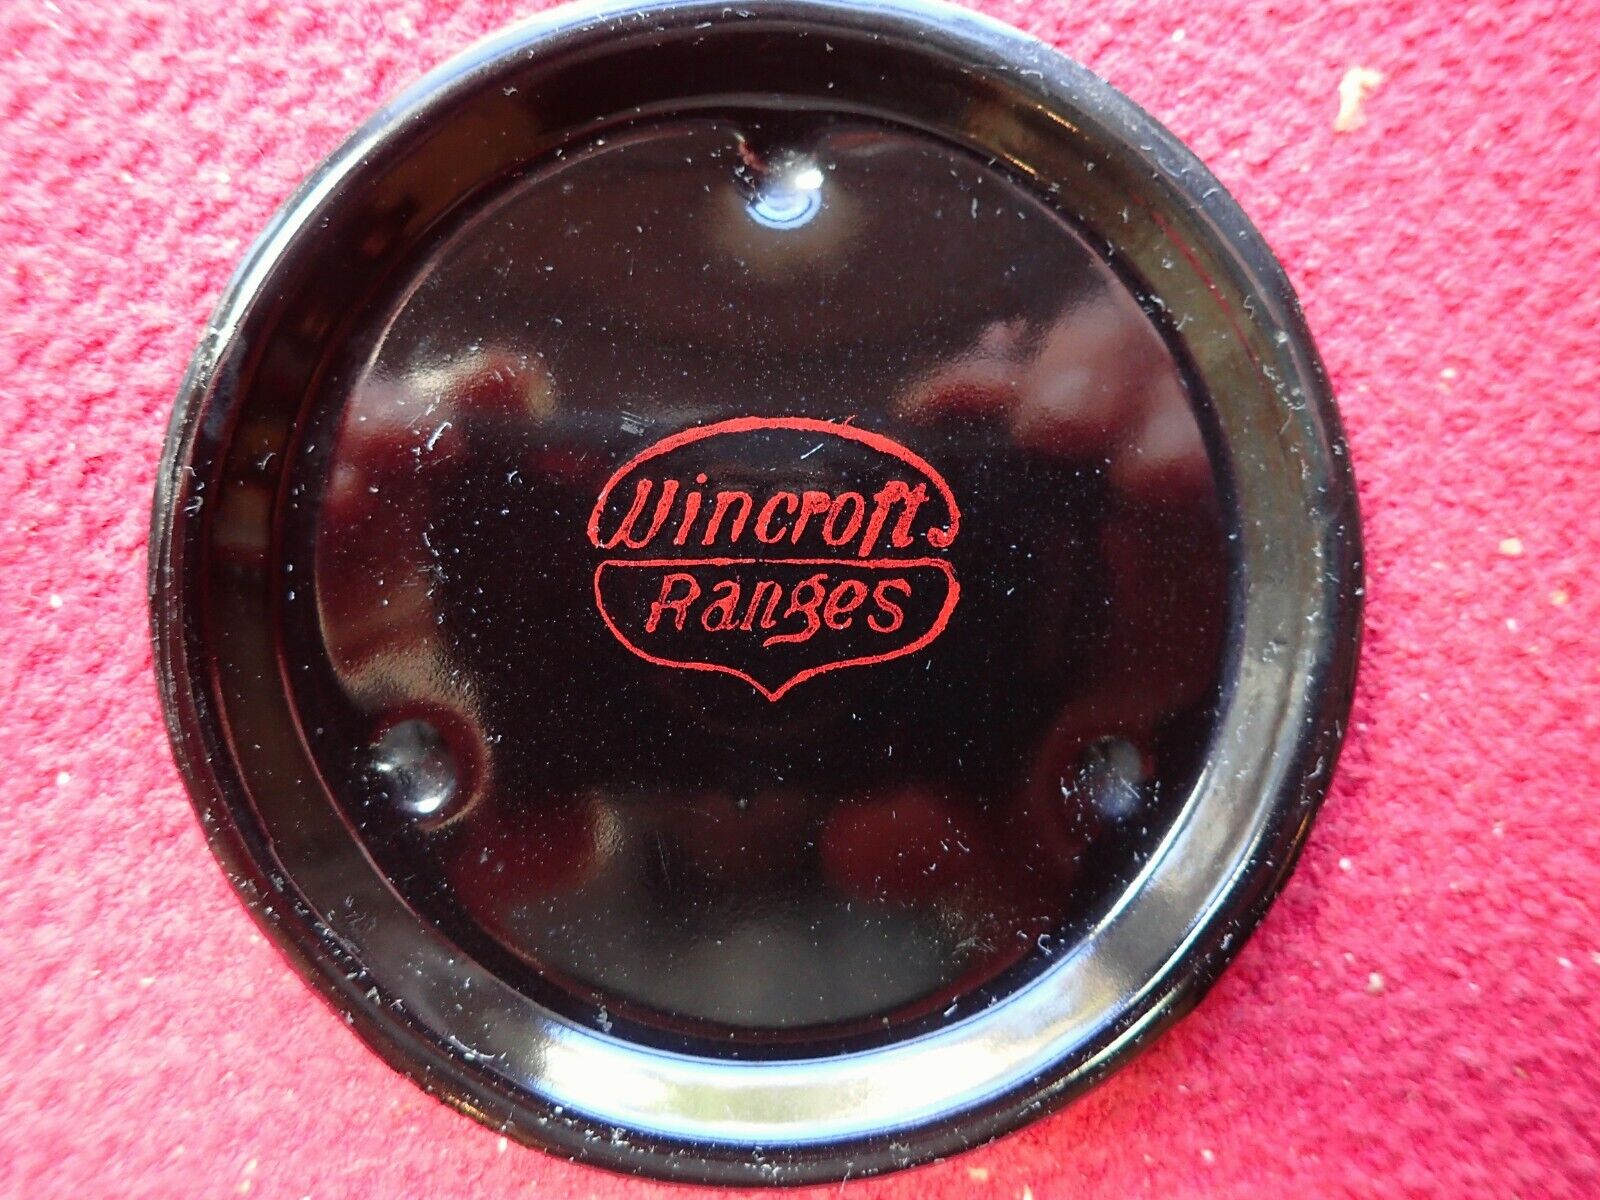 Vintage 1900s Wincroft Range Enamel Graniteware Pan Stove Advertising Coaster